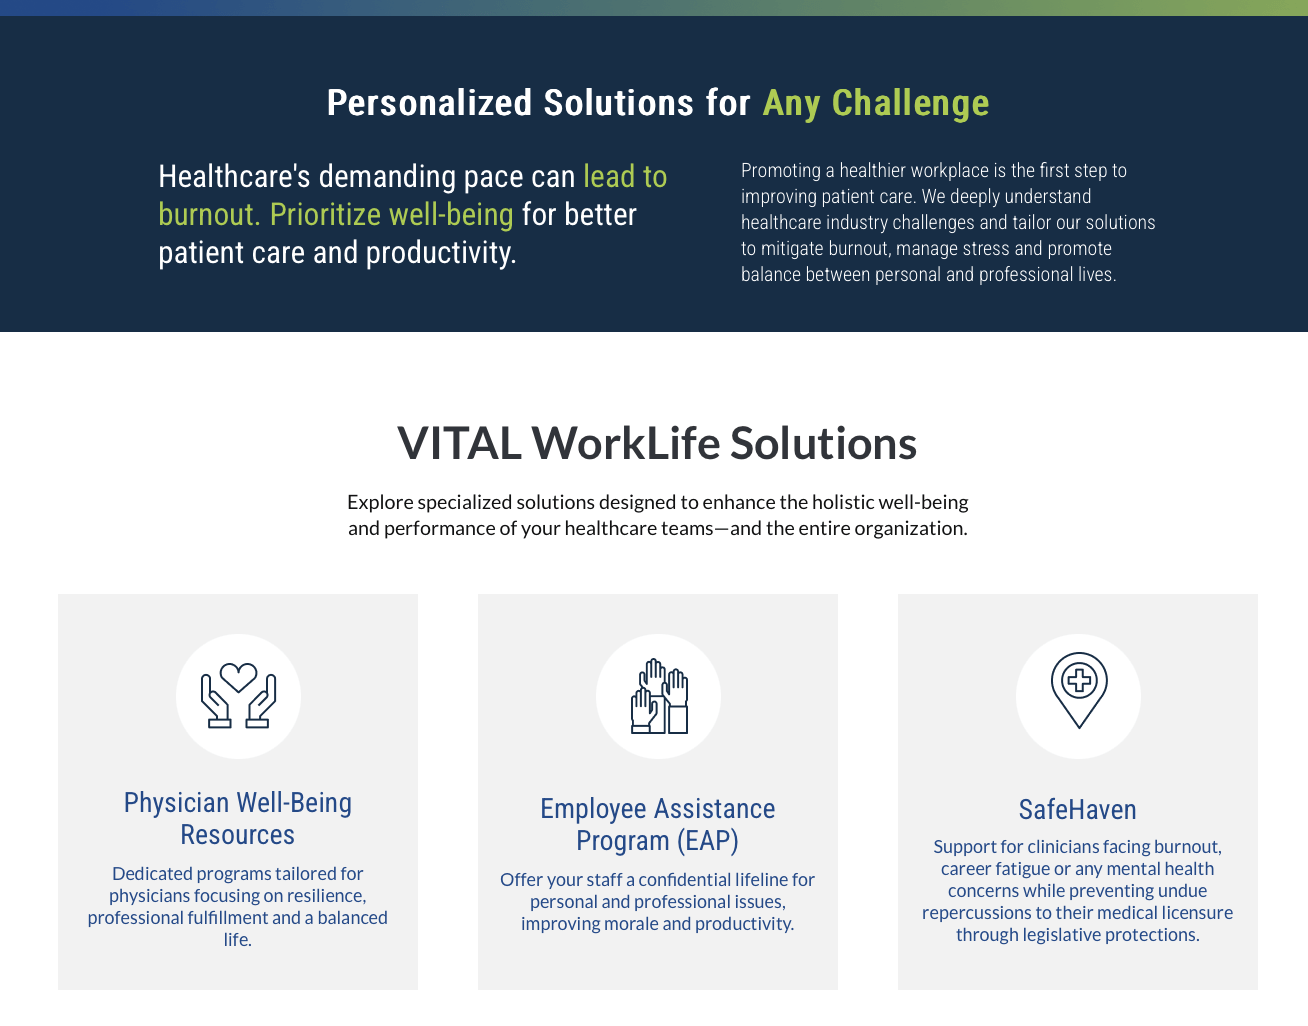 Vital WorkLife solutions